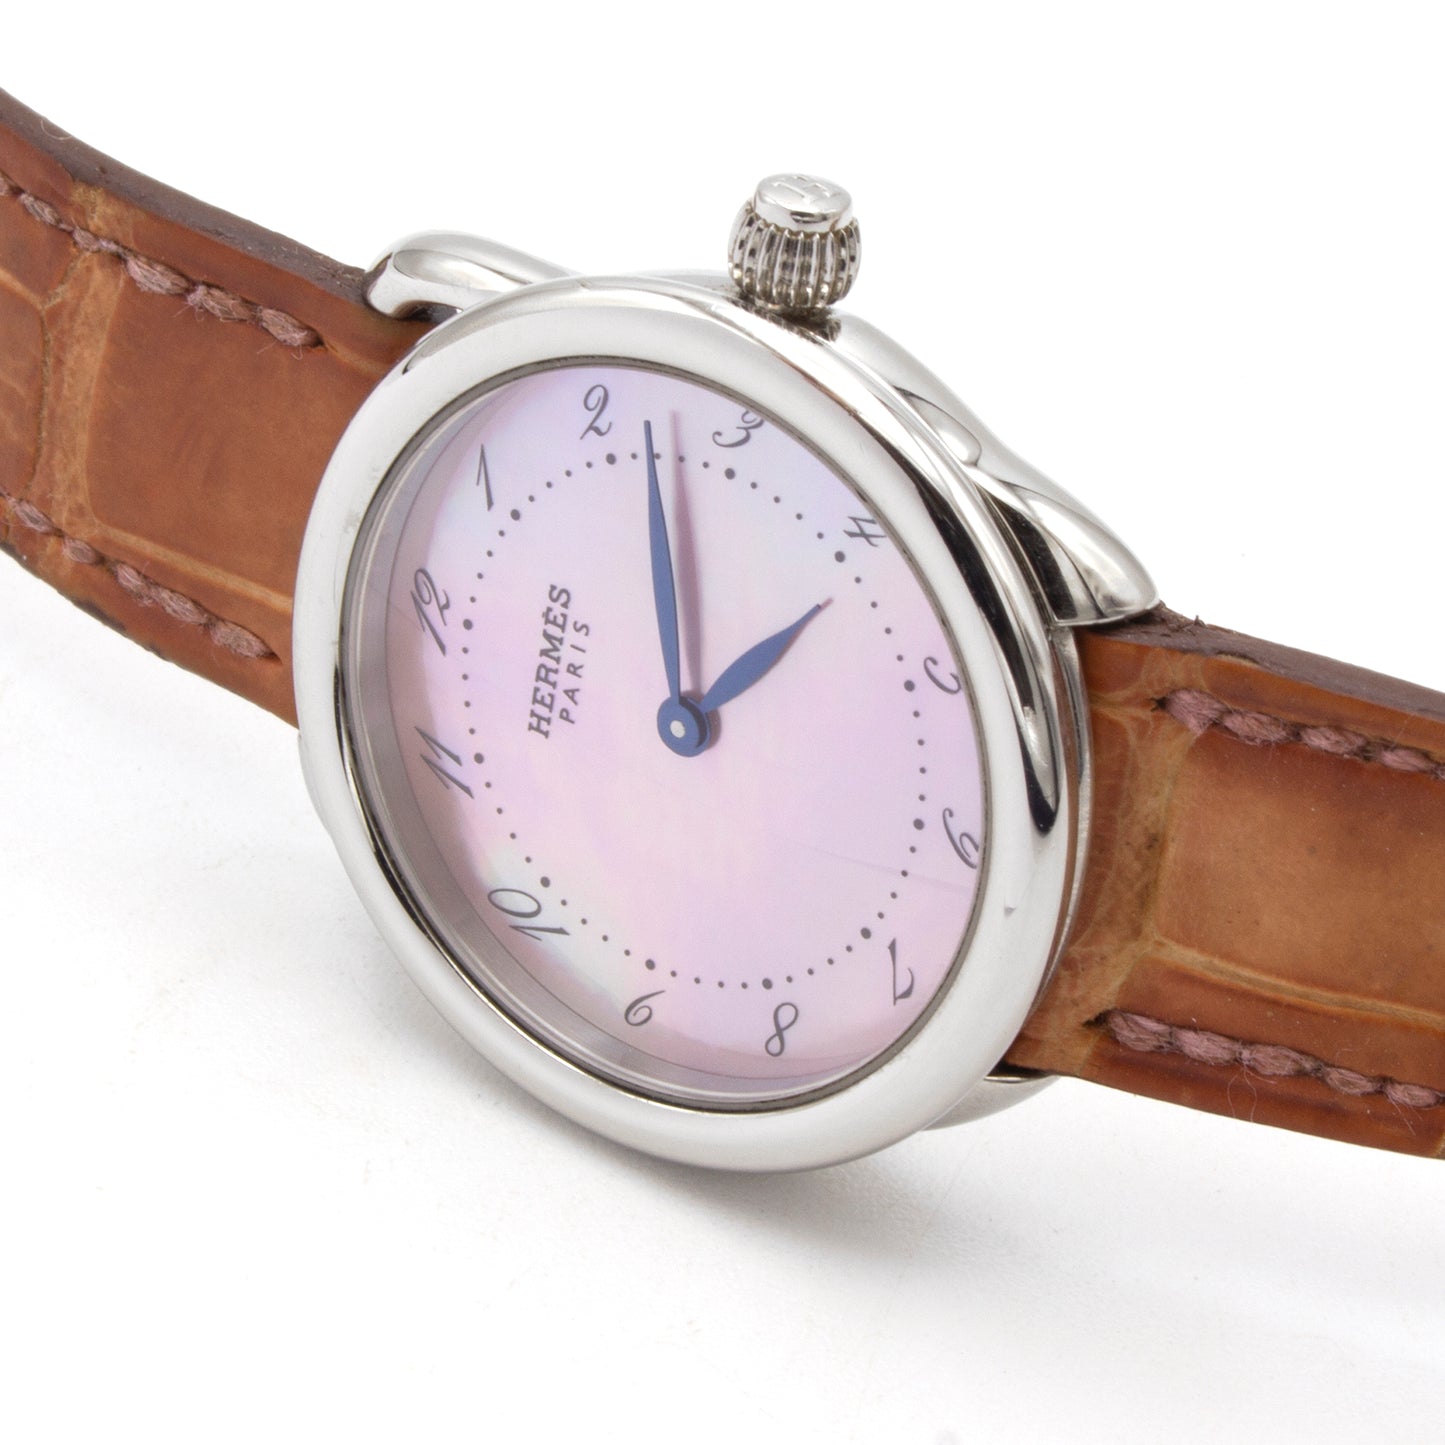 Hermès Arceau AR5.210 watch